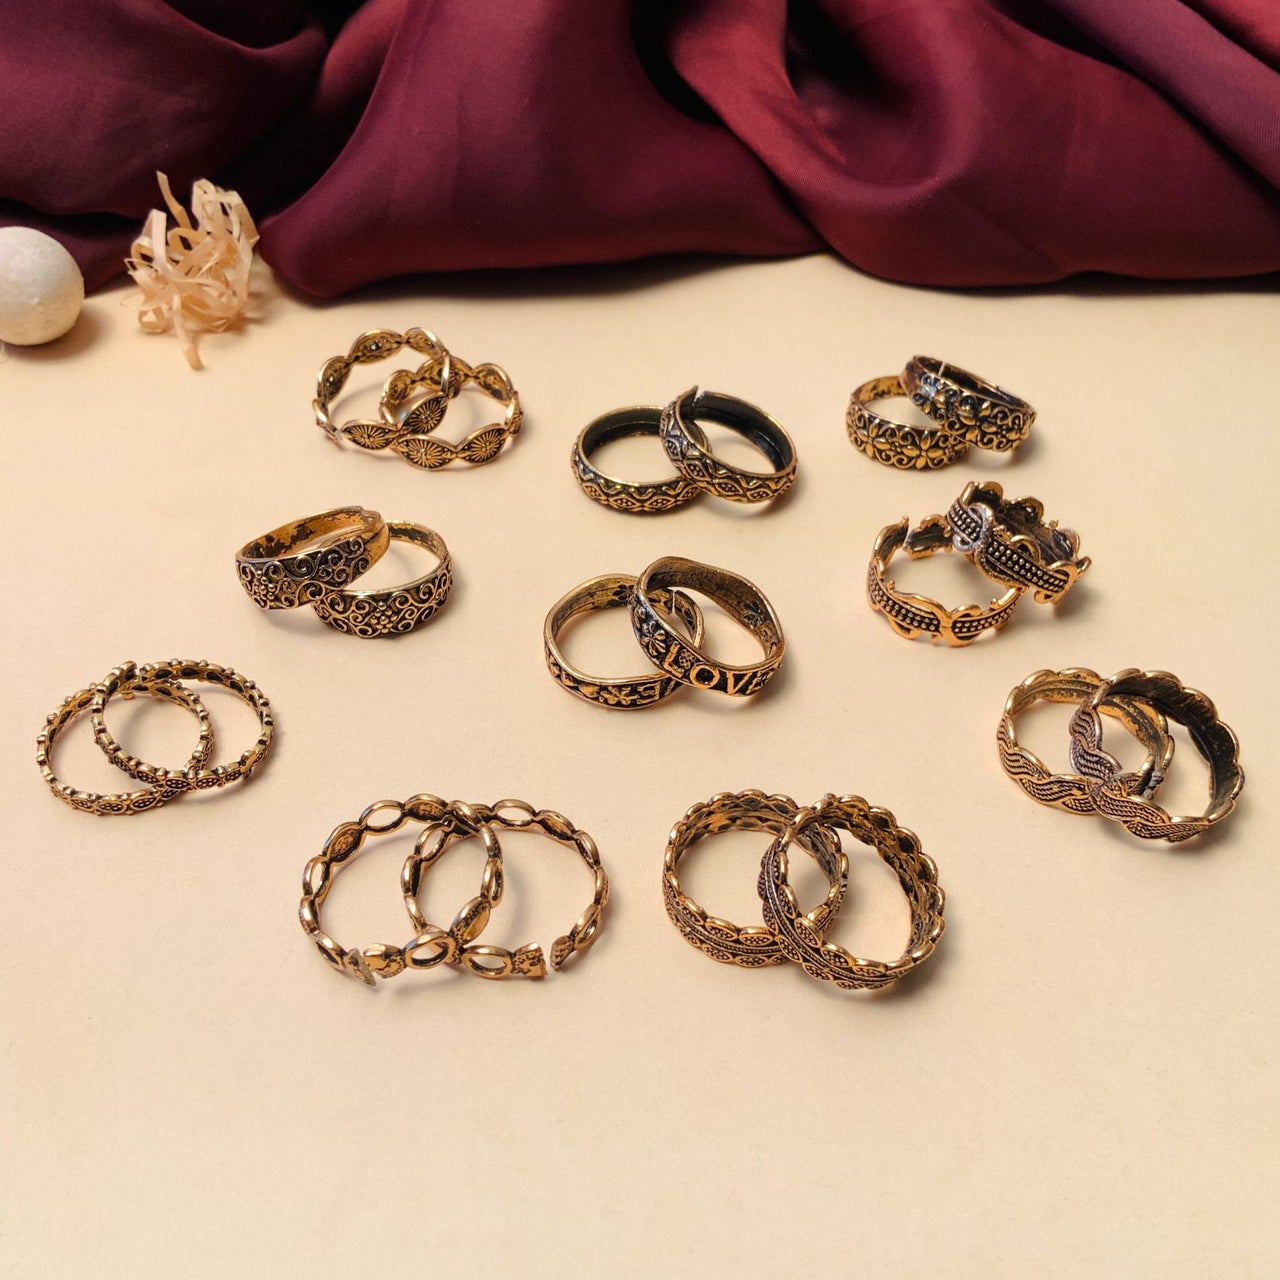 Bestseller Pack of 10 Gold Oxidised Toe rings Designs - Abdesignsjewellery